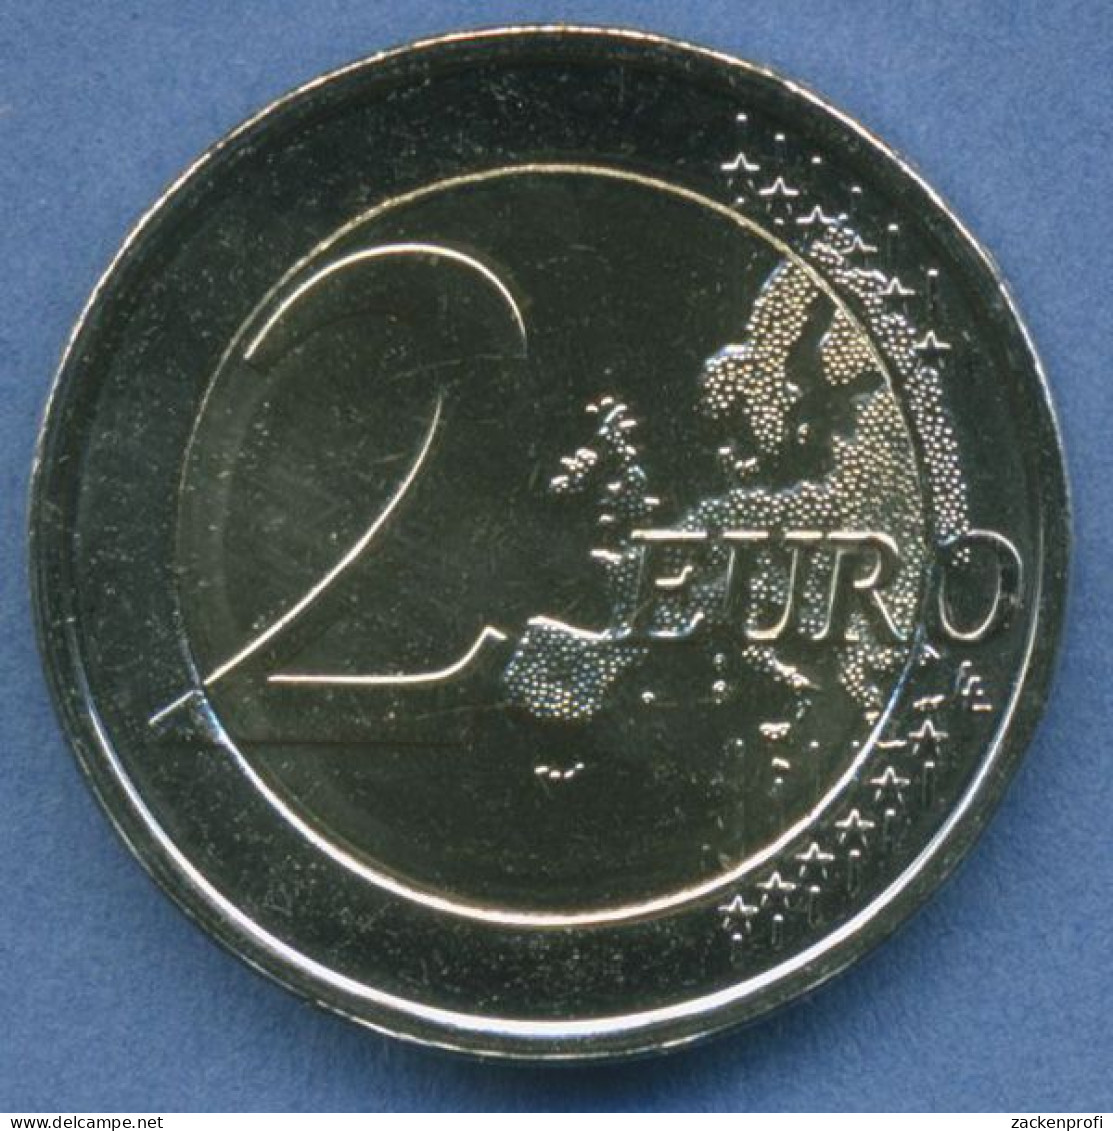 Finnland 2 Euro 2004 EU-Erweiterung, Lose In Kapsel, St (m1486) - Finland